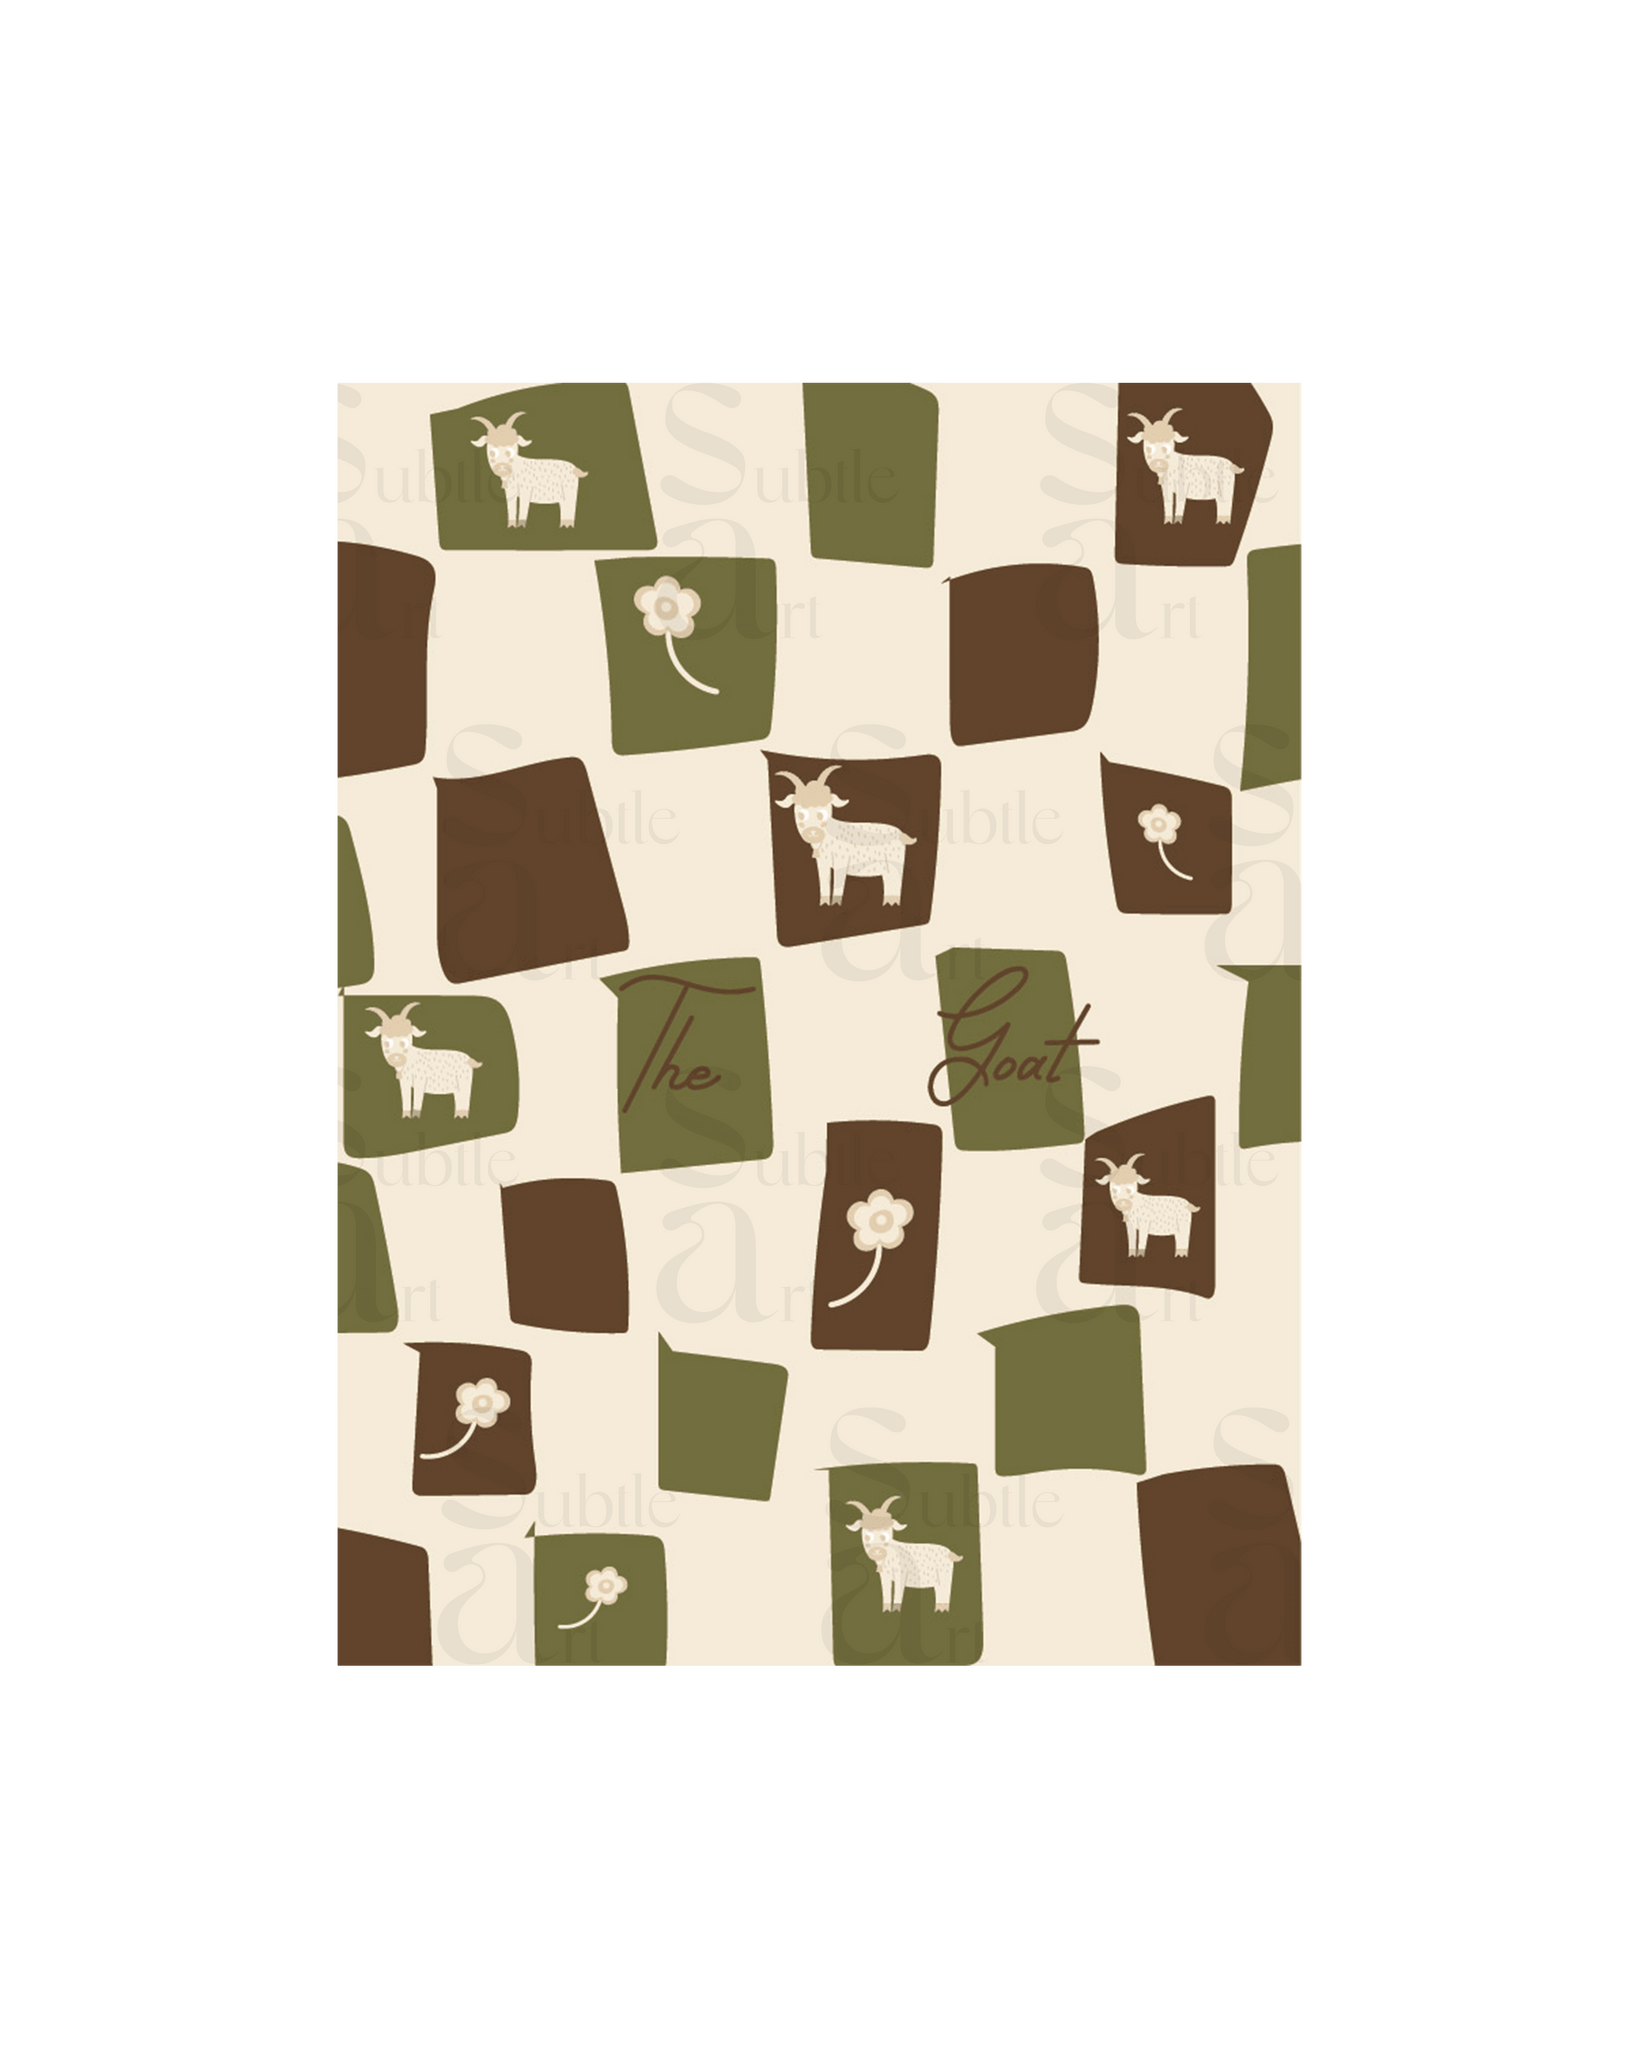 Digital Card - Birthday - The Goat